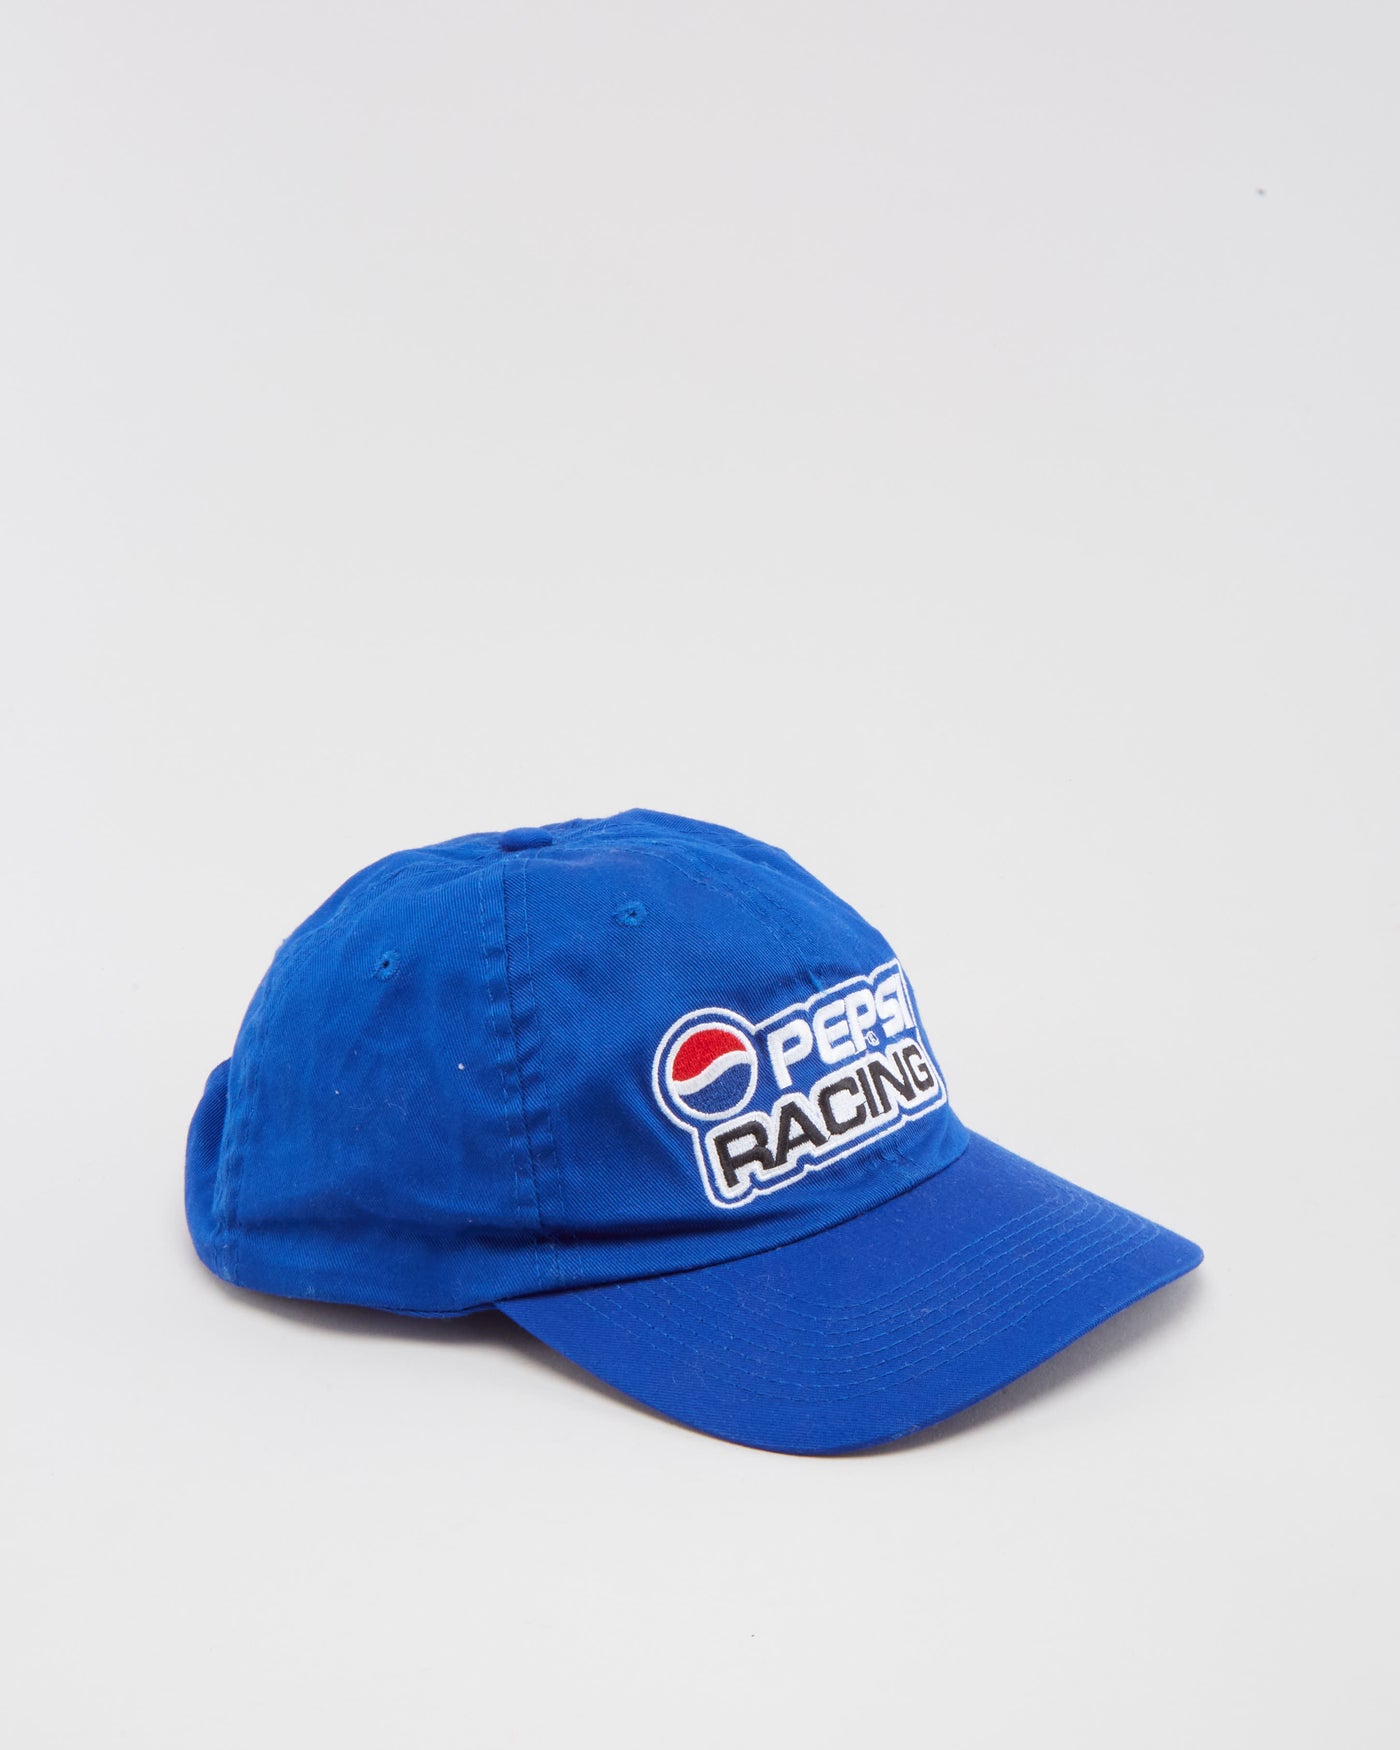 Vintage 90s Jeff Gordon Chase Authentics Pepsi Racing Blue Snapback Cap